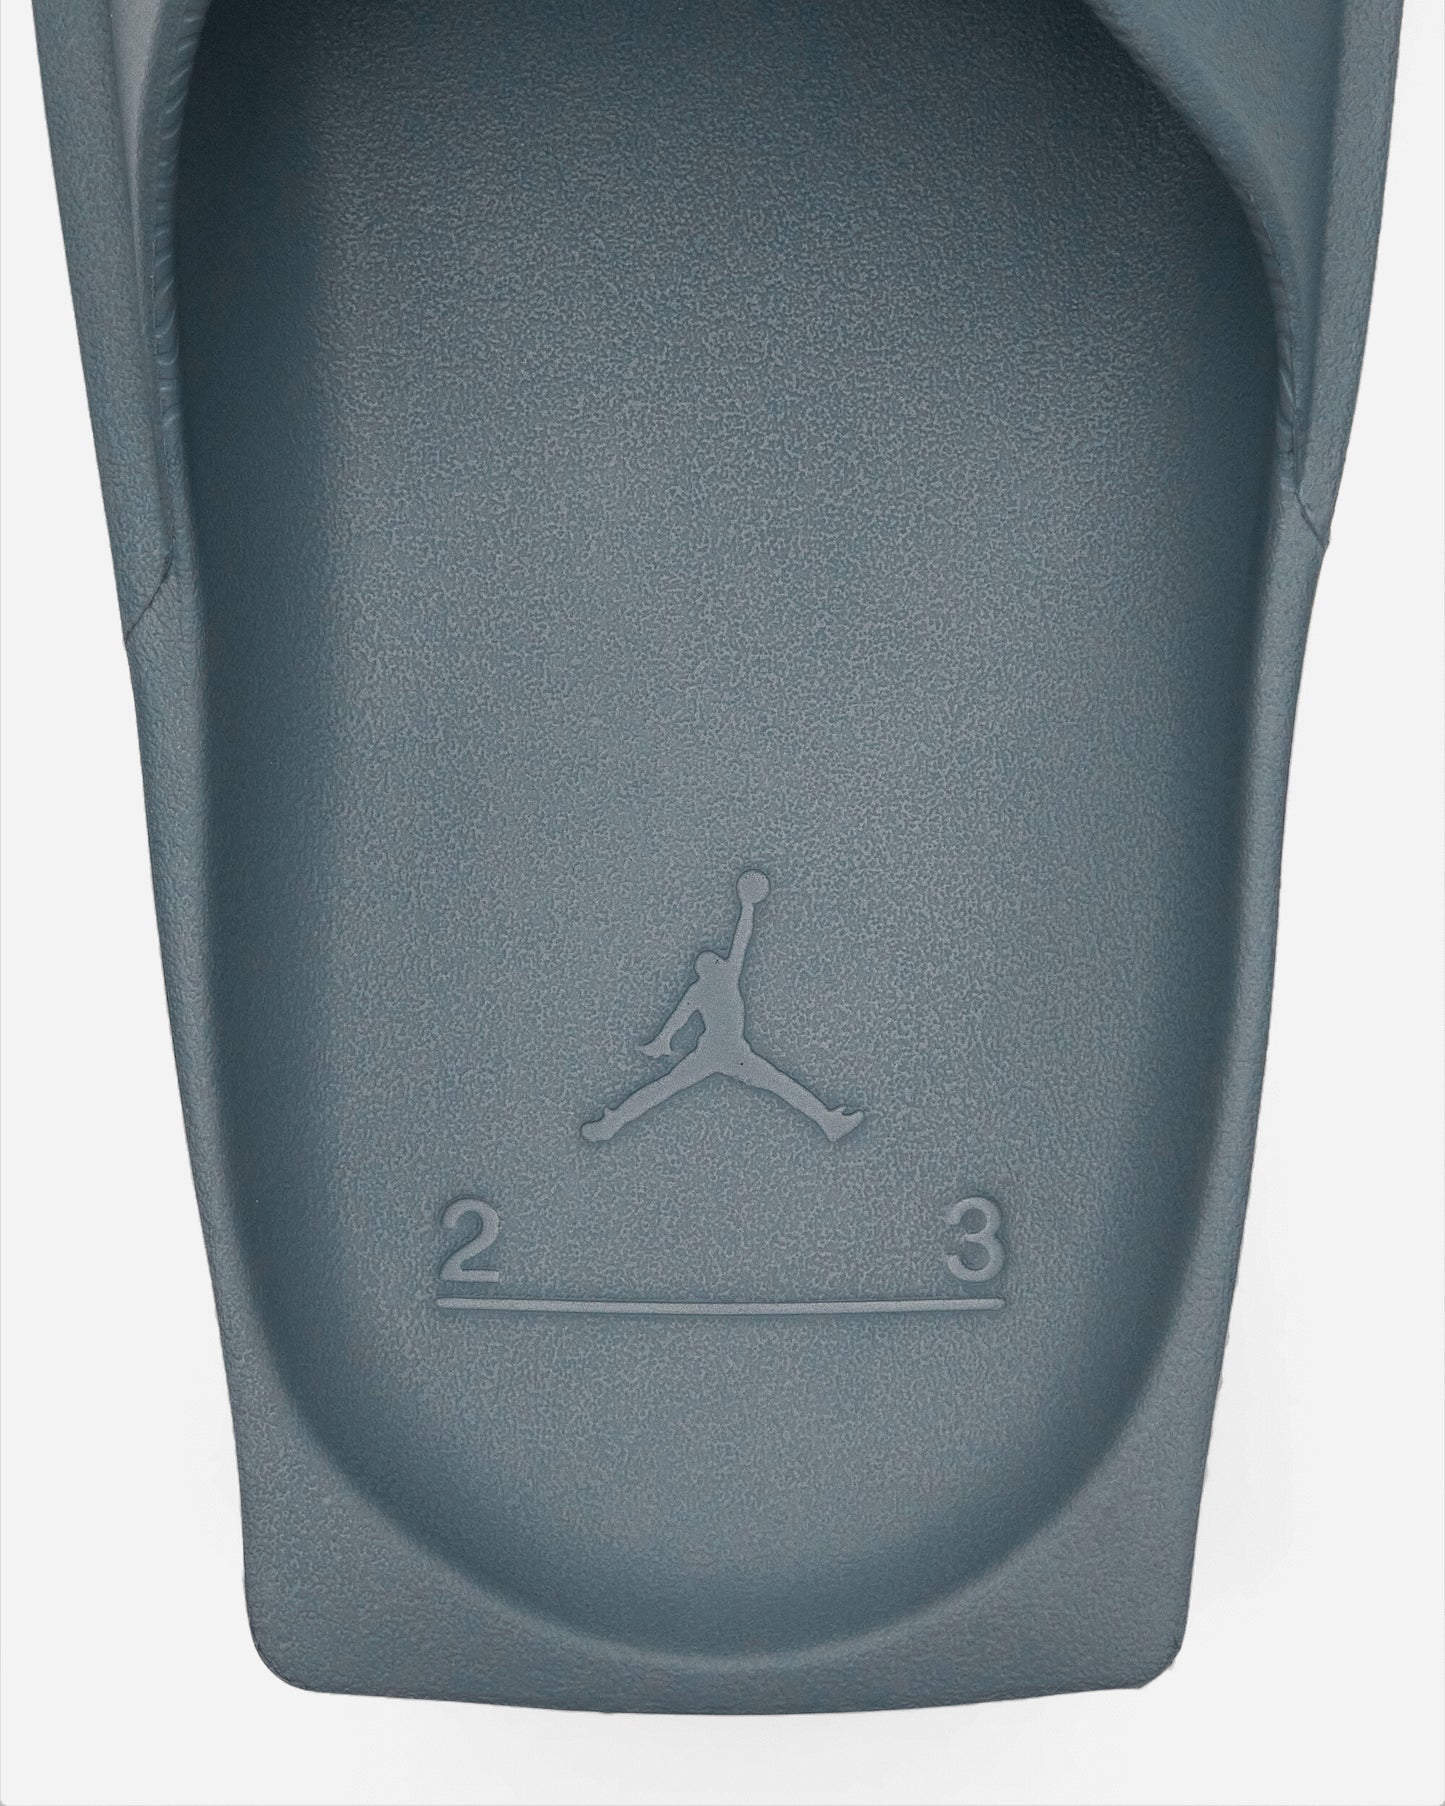 Nike Jordan Jordan Hex Mule Ozone Blue/Ozone Blue Sandals and Slides Slides DX6405-004